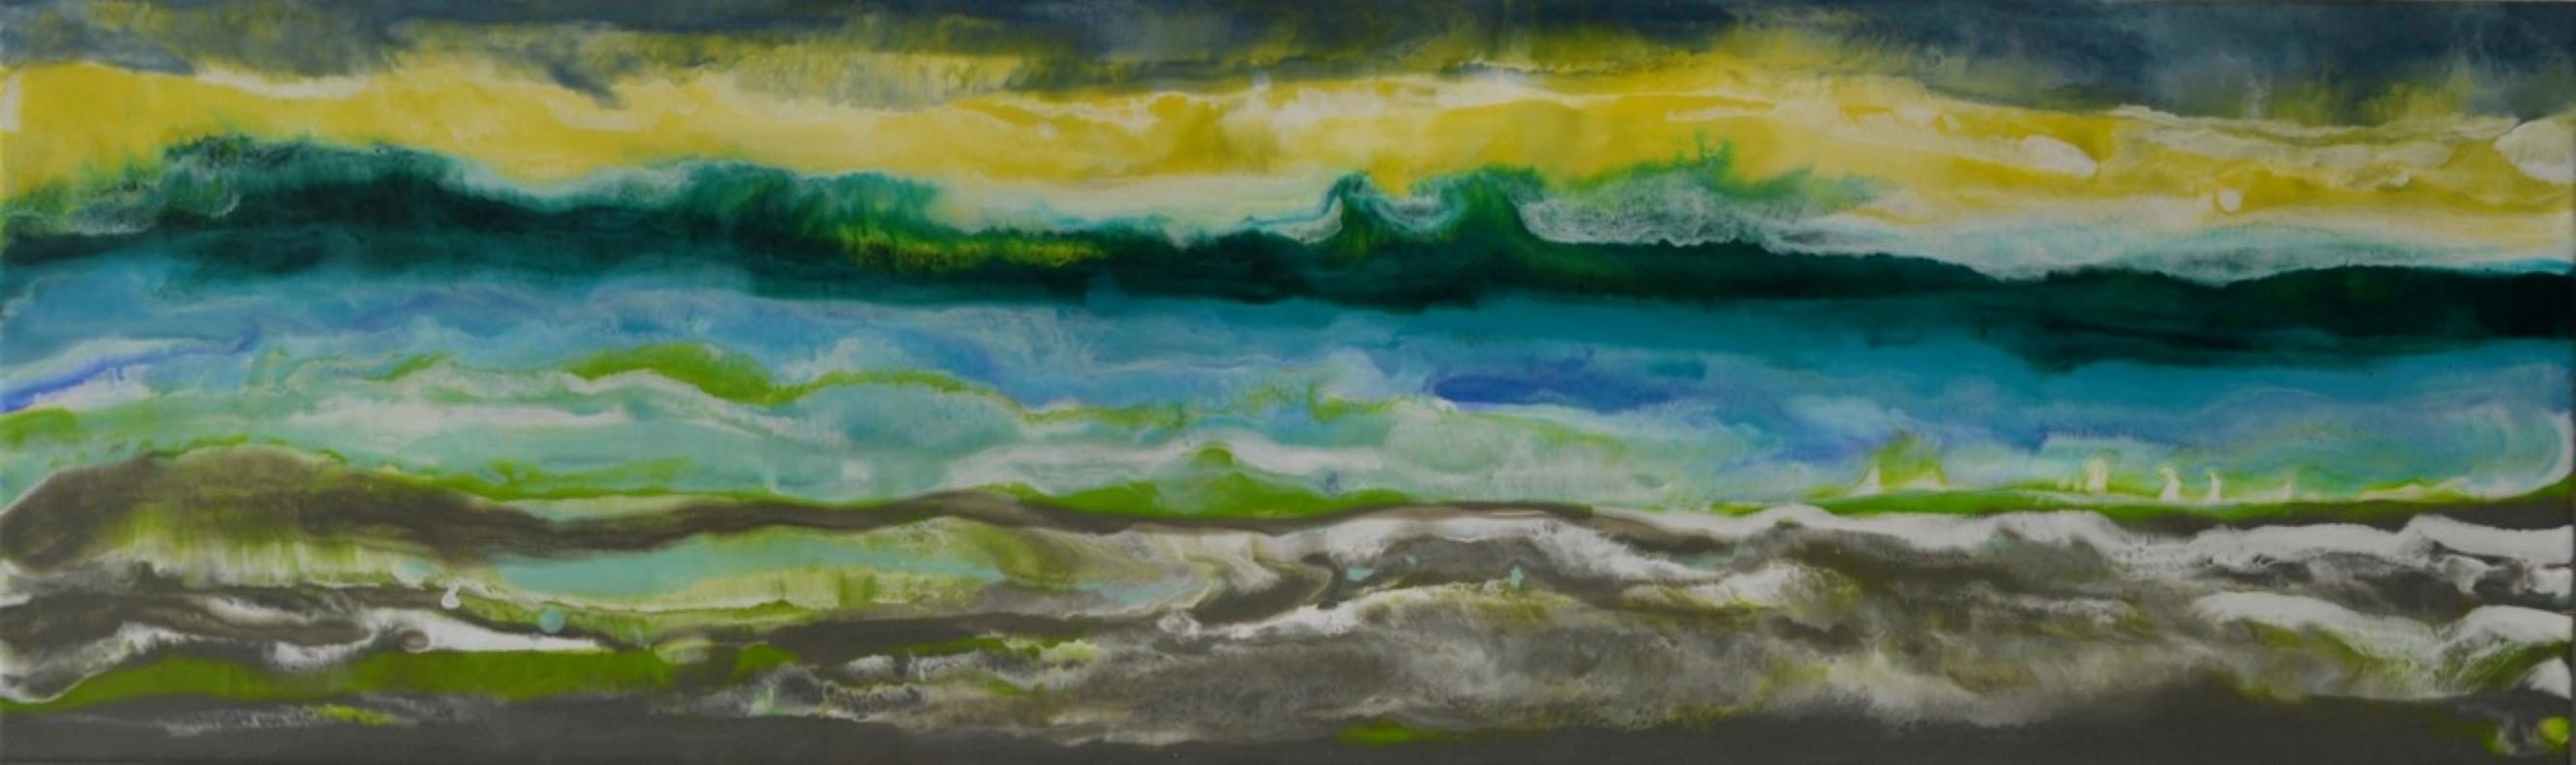 Cayo Romano, Abstract, Landscape, Yellow, Green, Blue, Encaustic, Horizontal